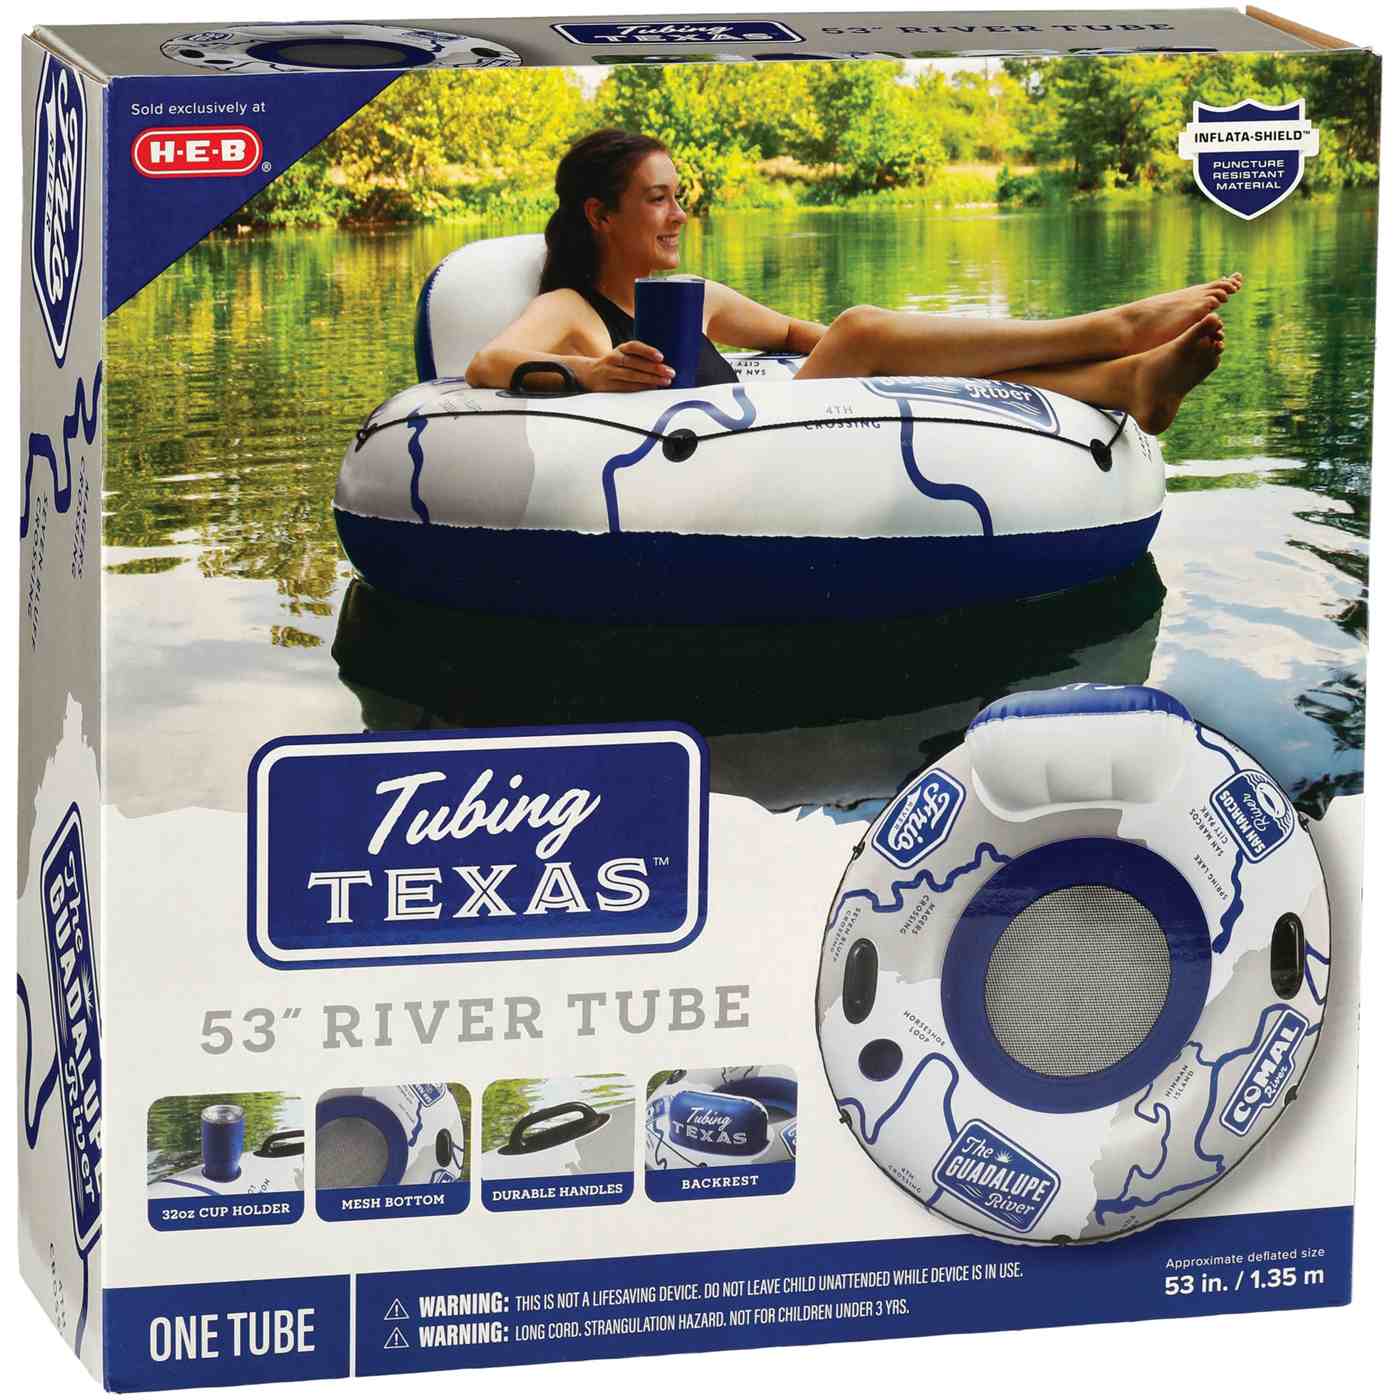 H-E-B Tubing Texas Inflatable River Tube - Gray